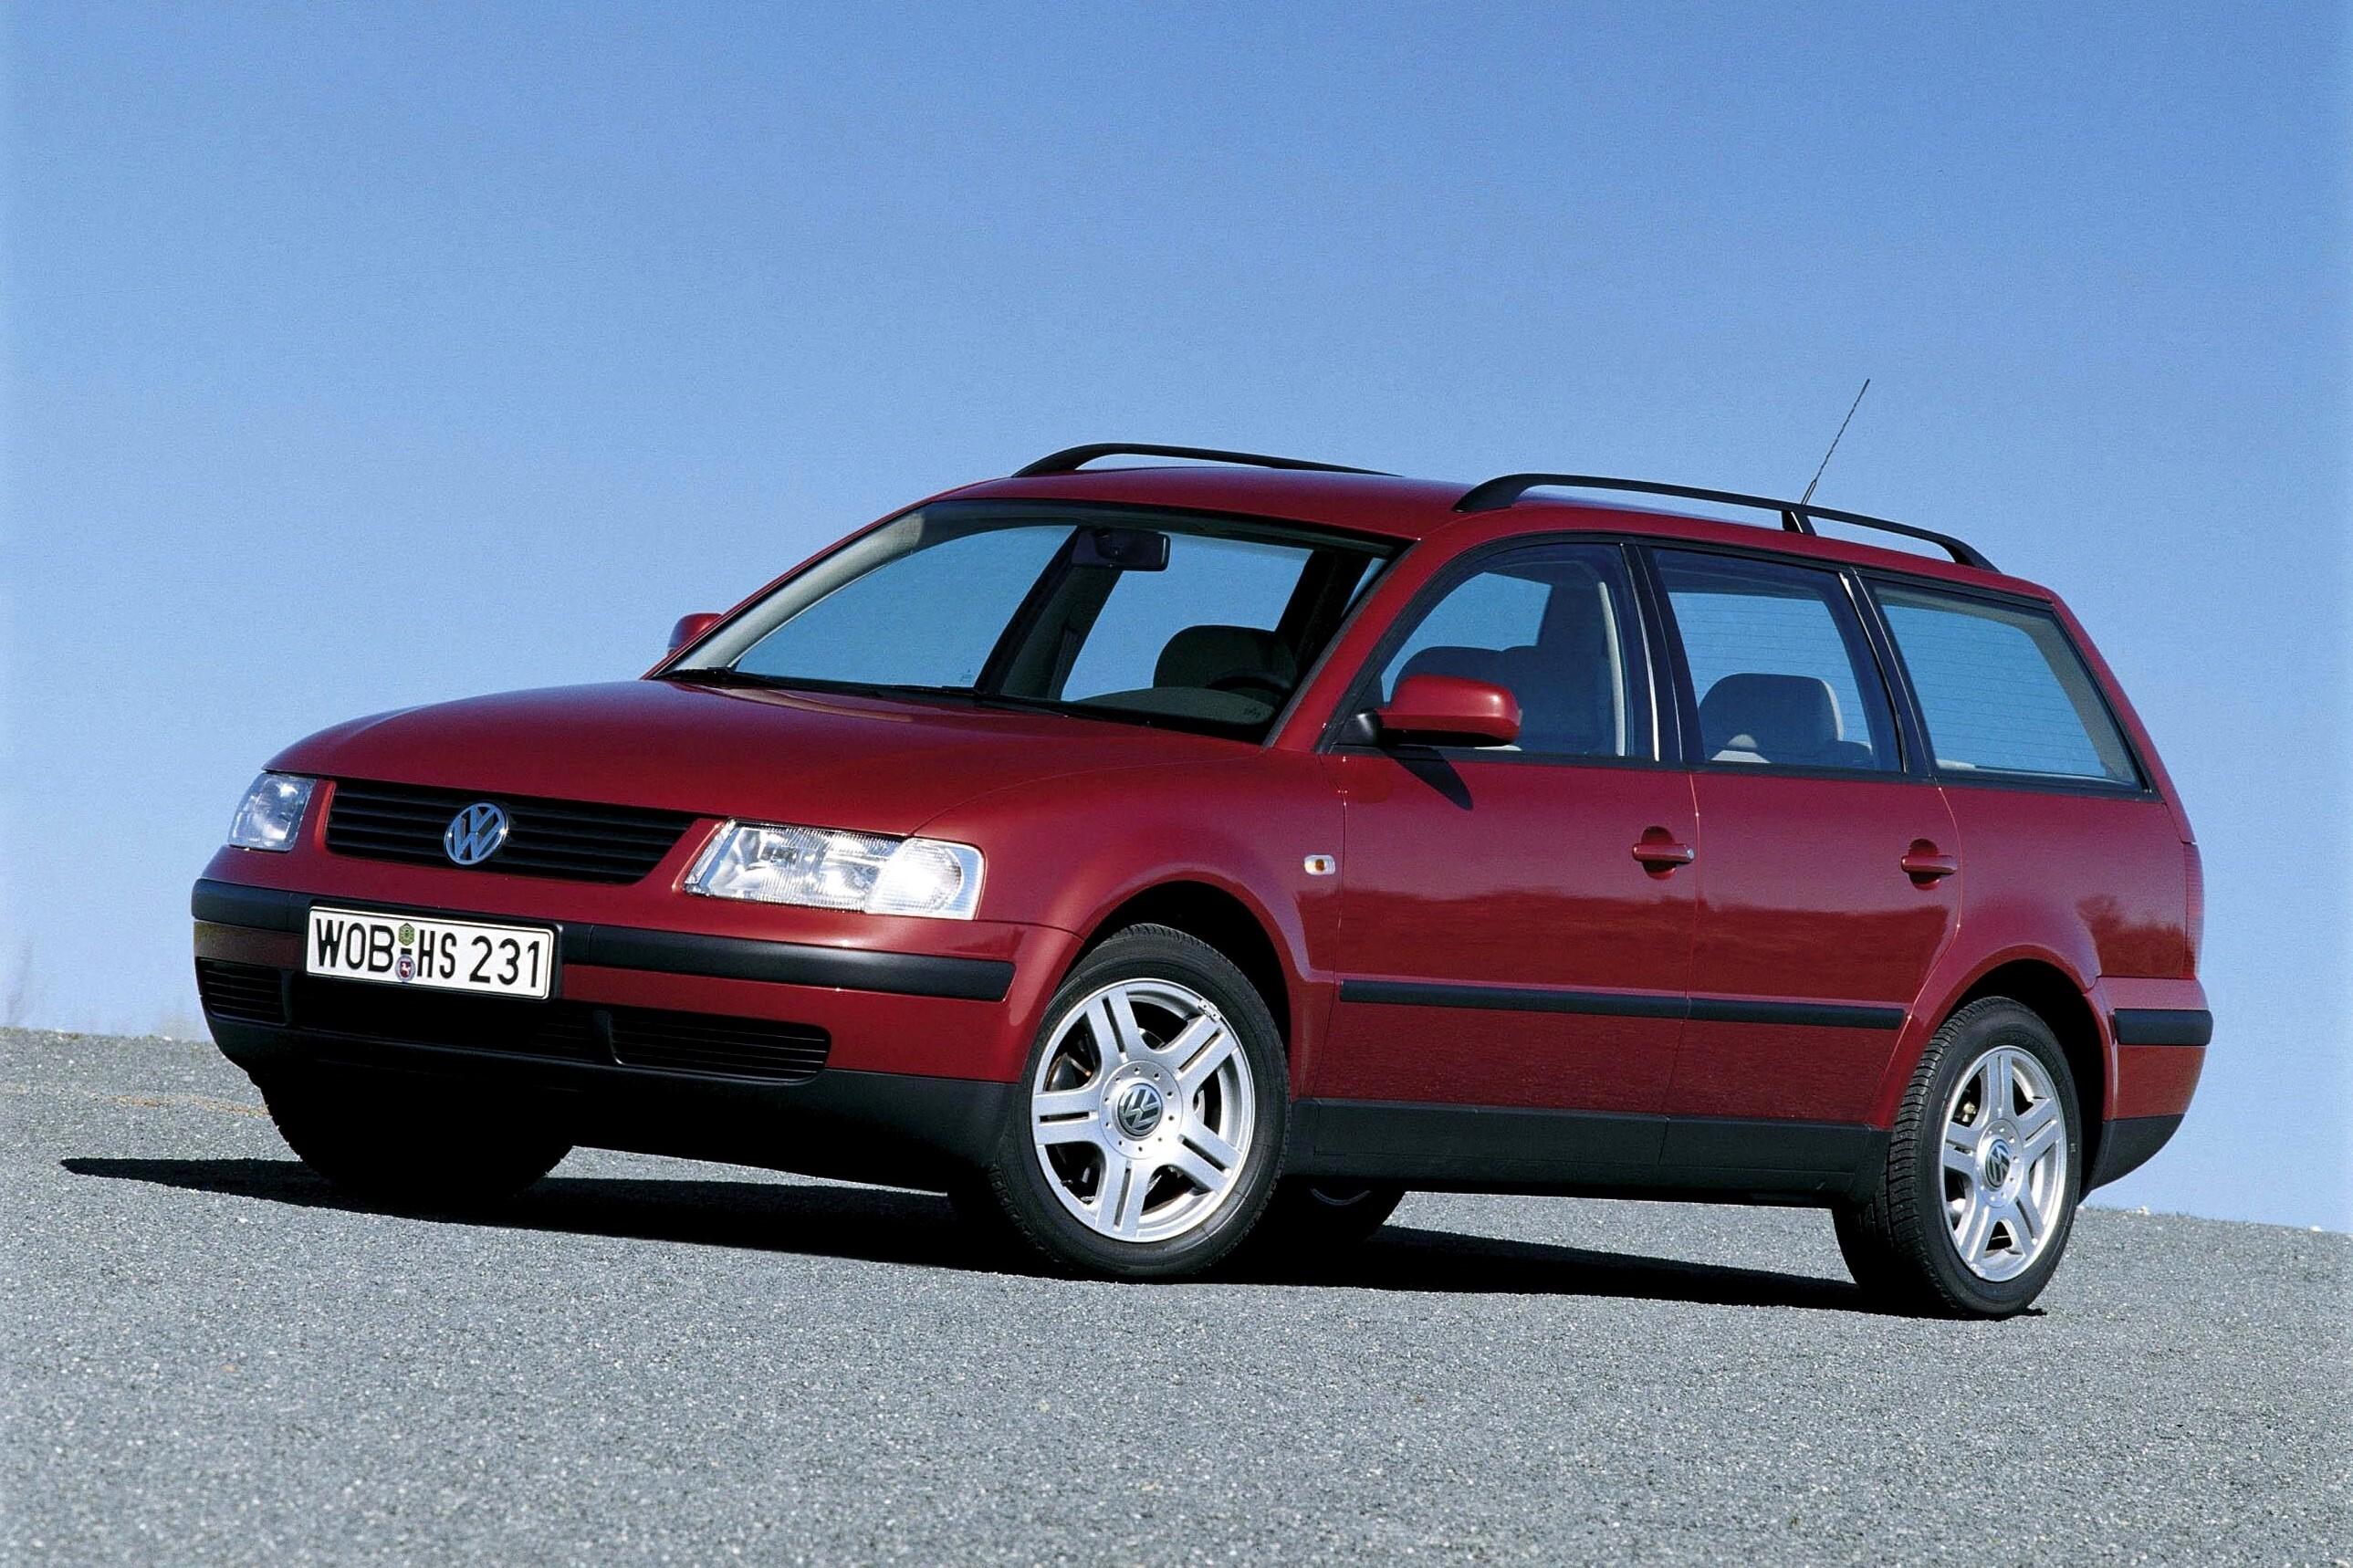 Volkswagen b5 универсал. Volkswagen Passat универсал. Фольц Ваген Пасат универсал. Фольксваген Пассат 1997 универсал. Volkswagen Passat b5 2005 универсал.